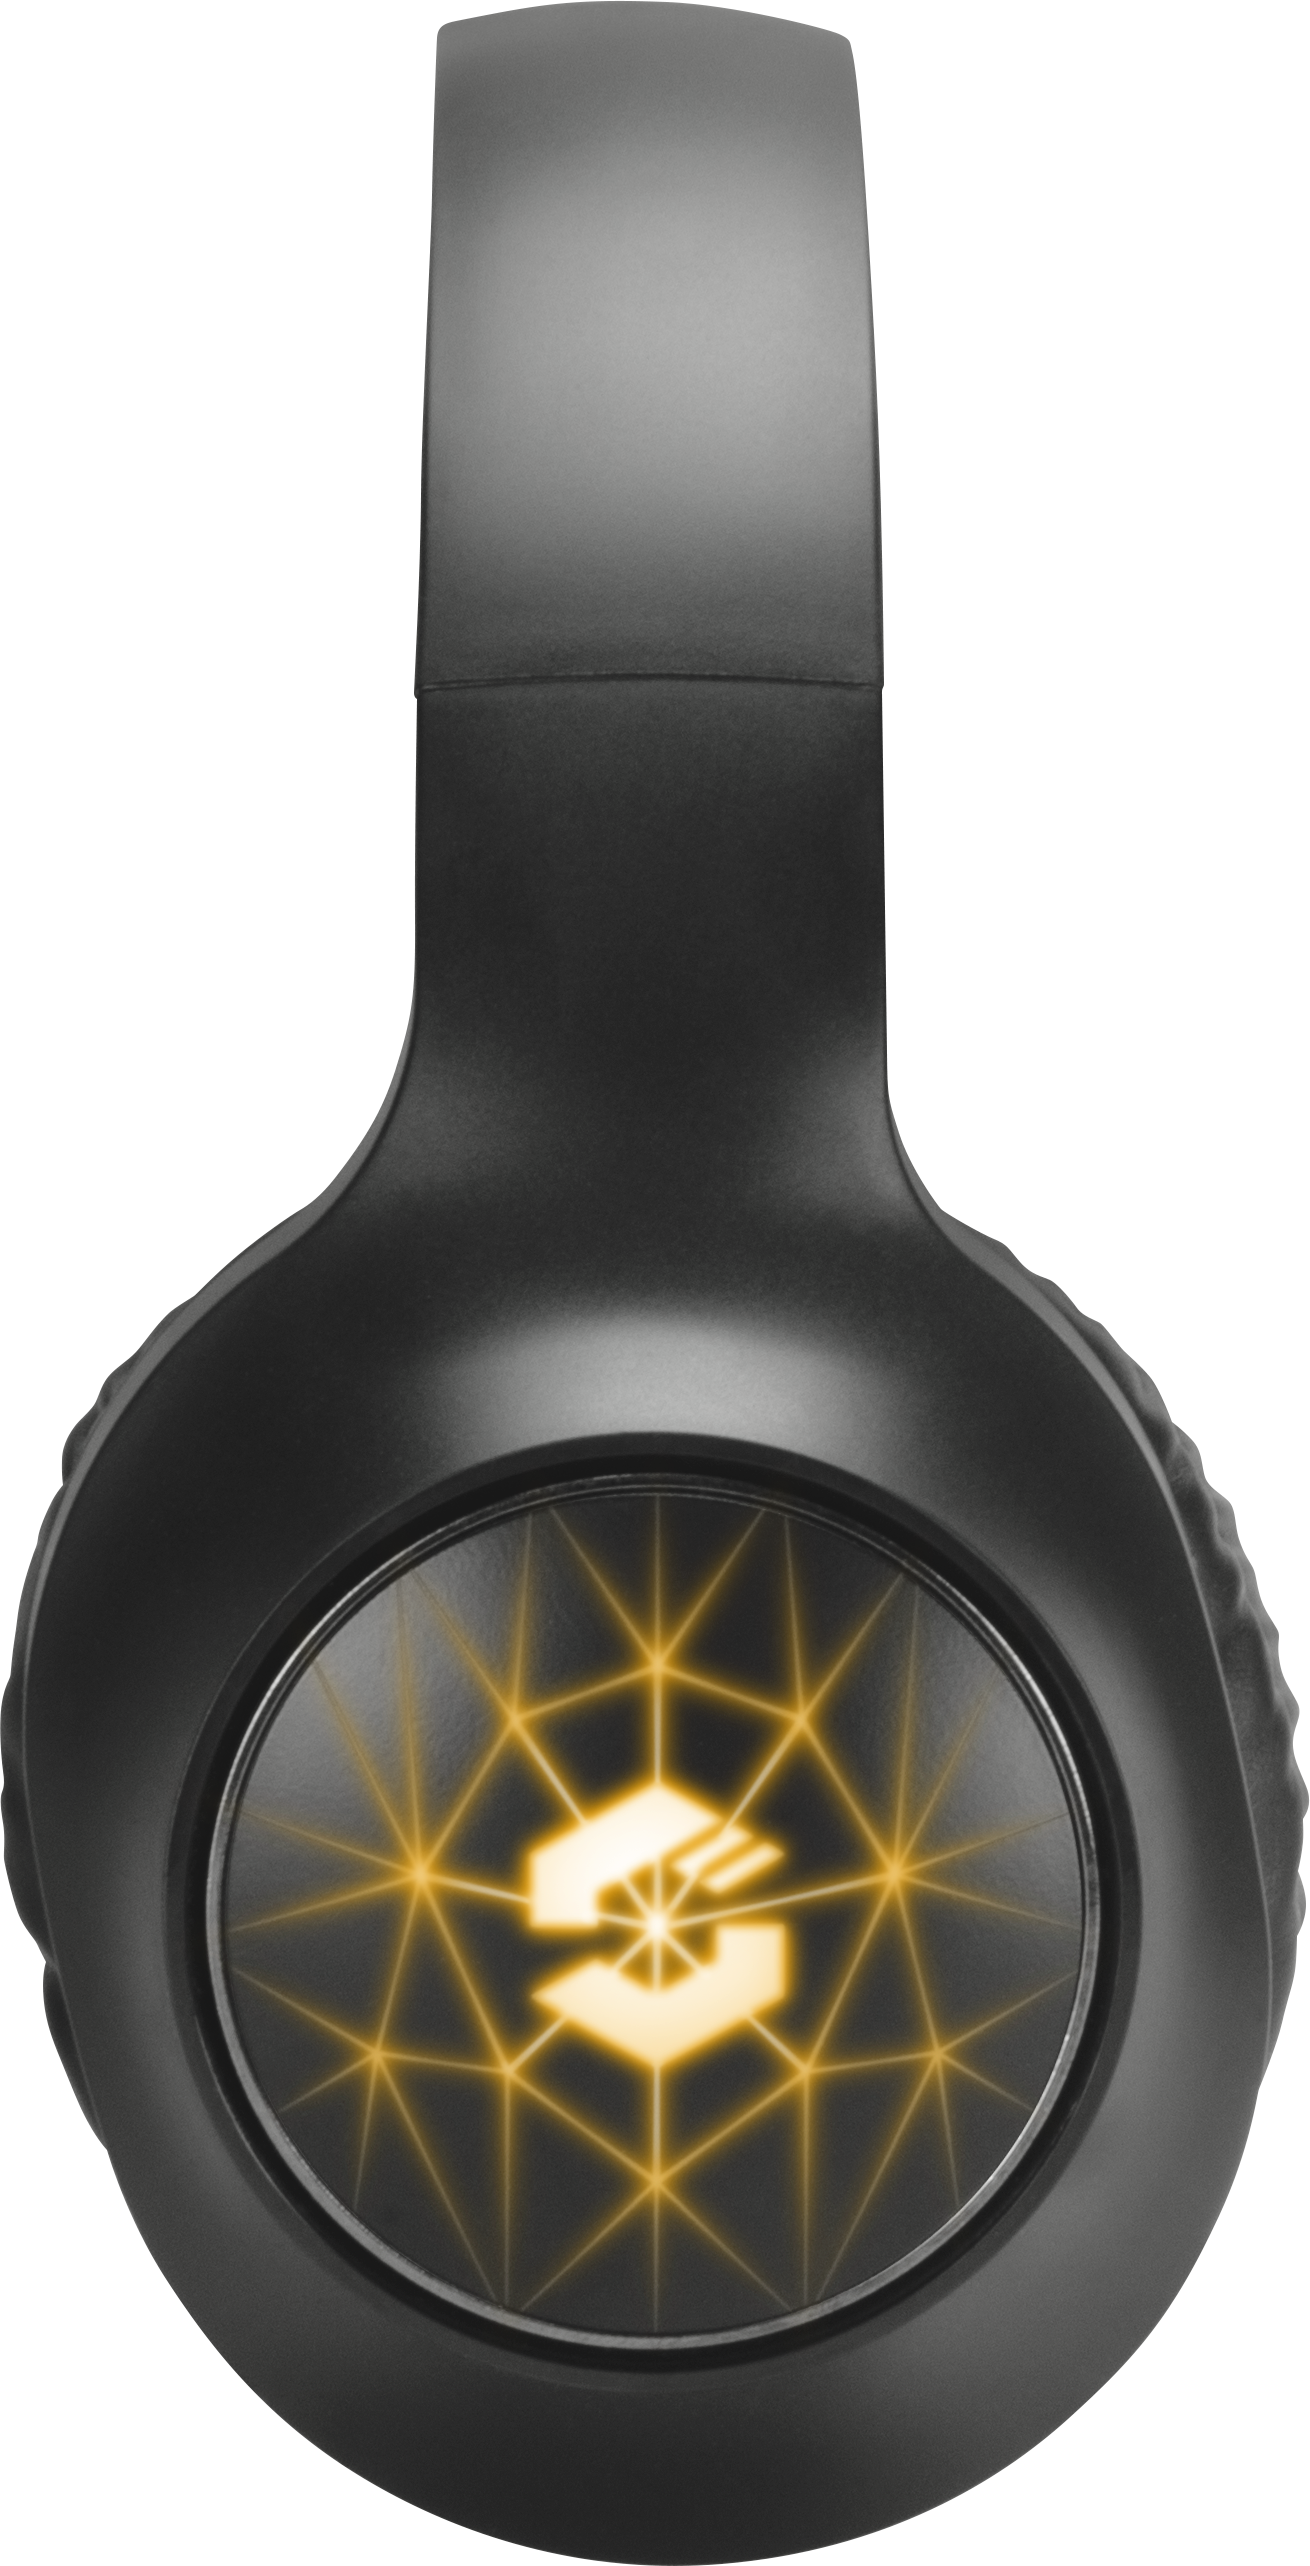 VIRTAS Illuminated 7.1 Gaming Headset, black